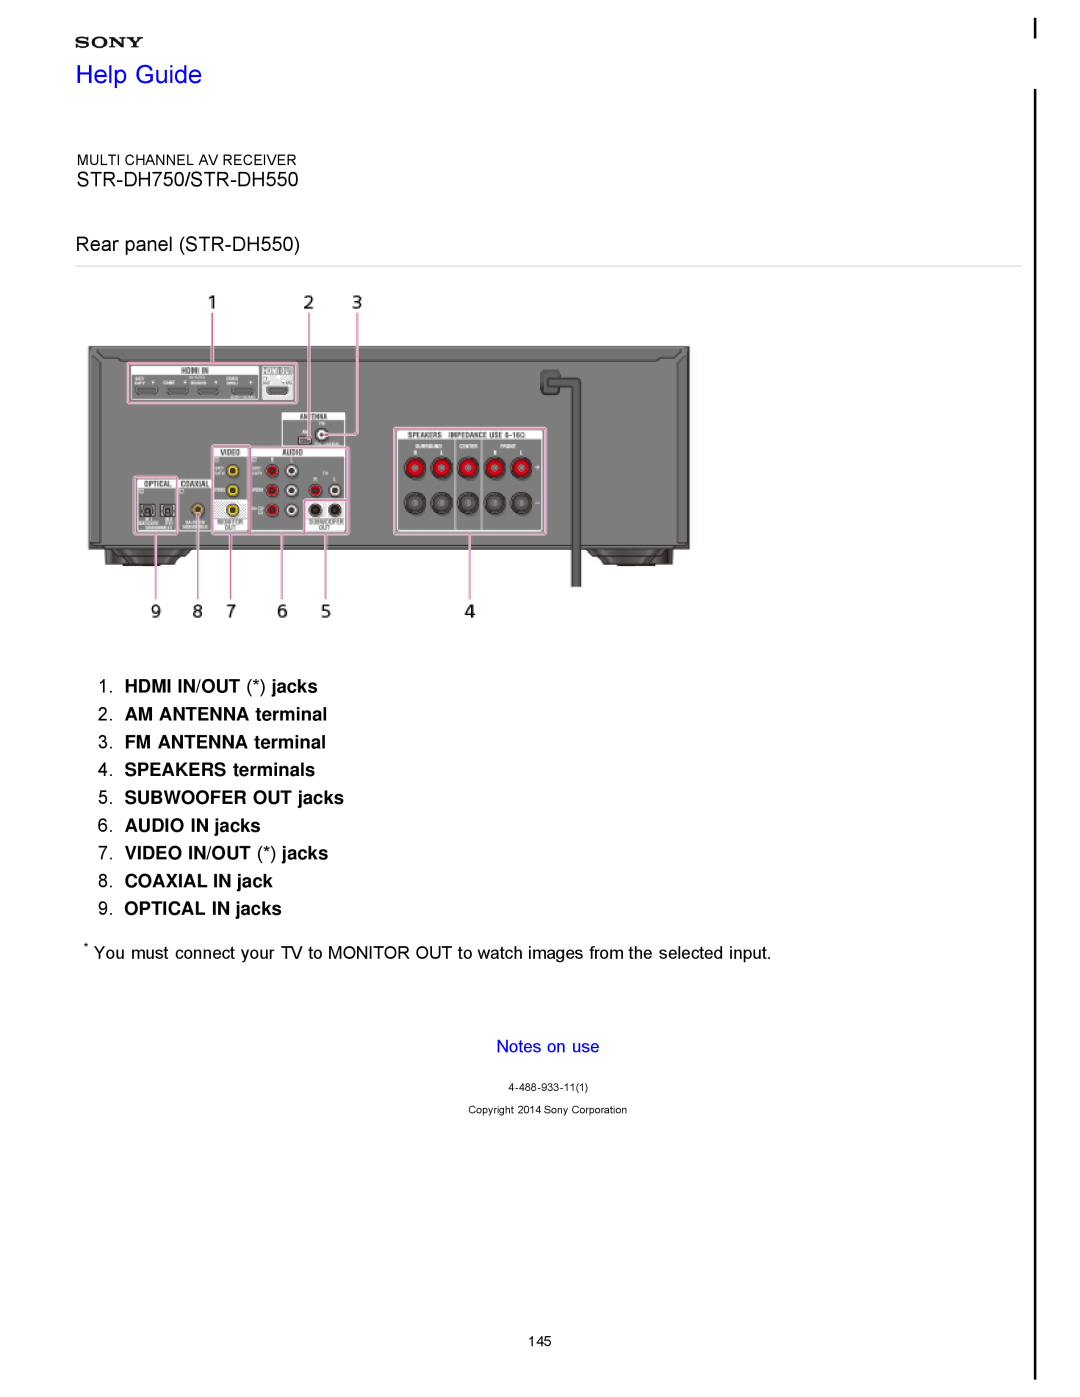 Sony STR-DH750/STR-DH550 Rear panel STR-DH550, Help Guide, HDMI IN/OUT * jacks 2.AM ANTENNA terminal, OPTICAL IN jacks 